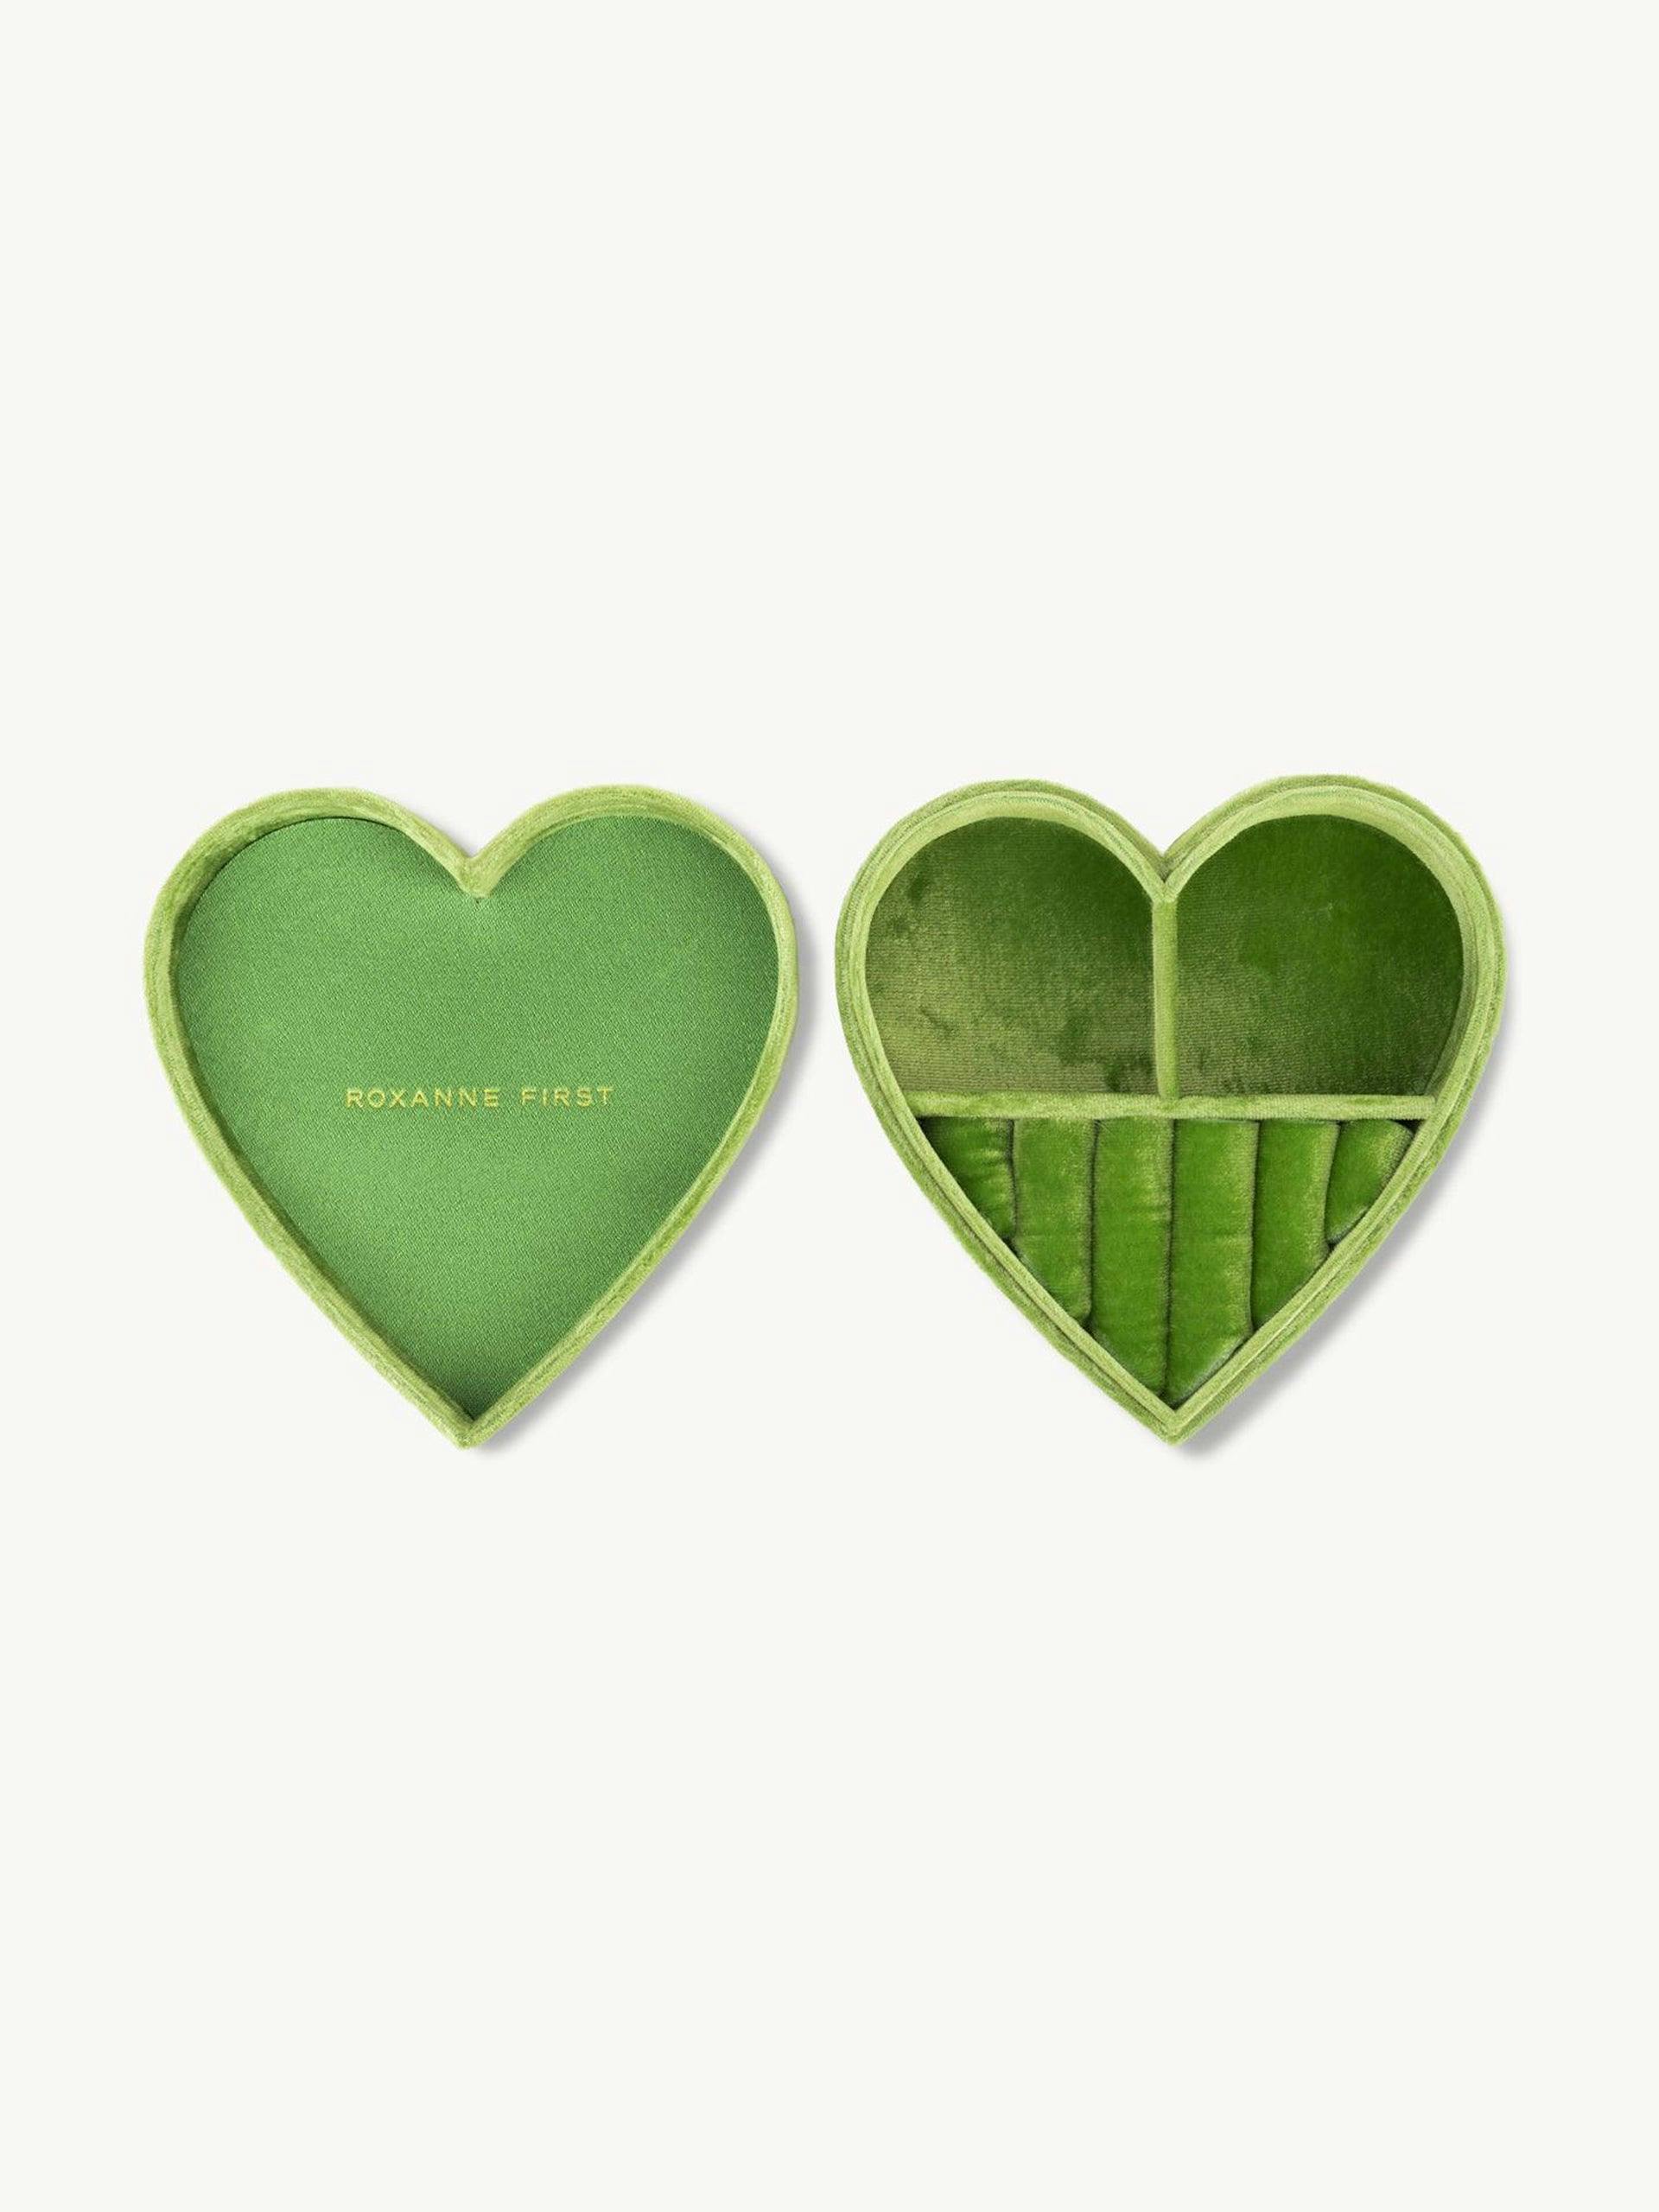 Lime green heart-shaped jewellery box